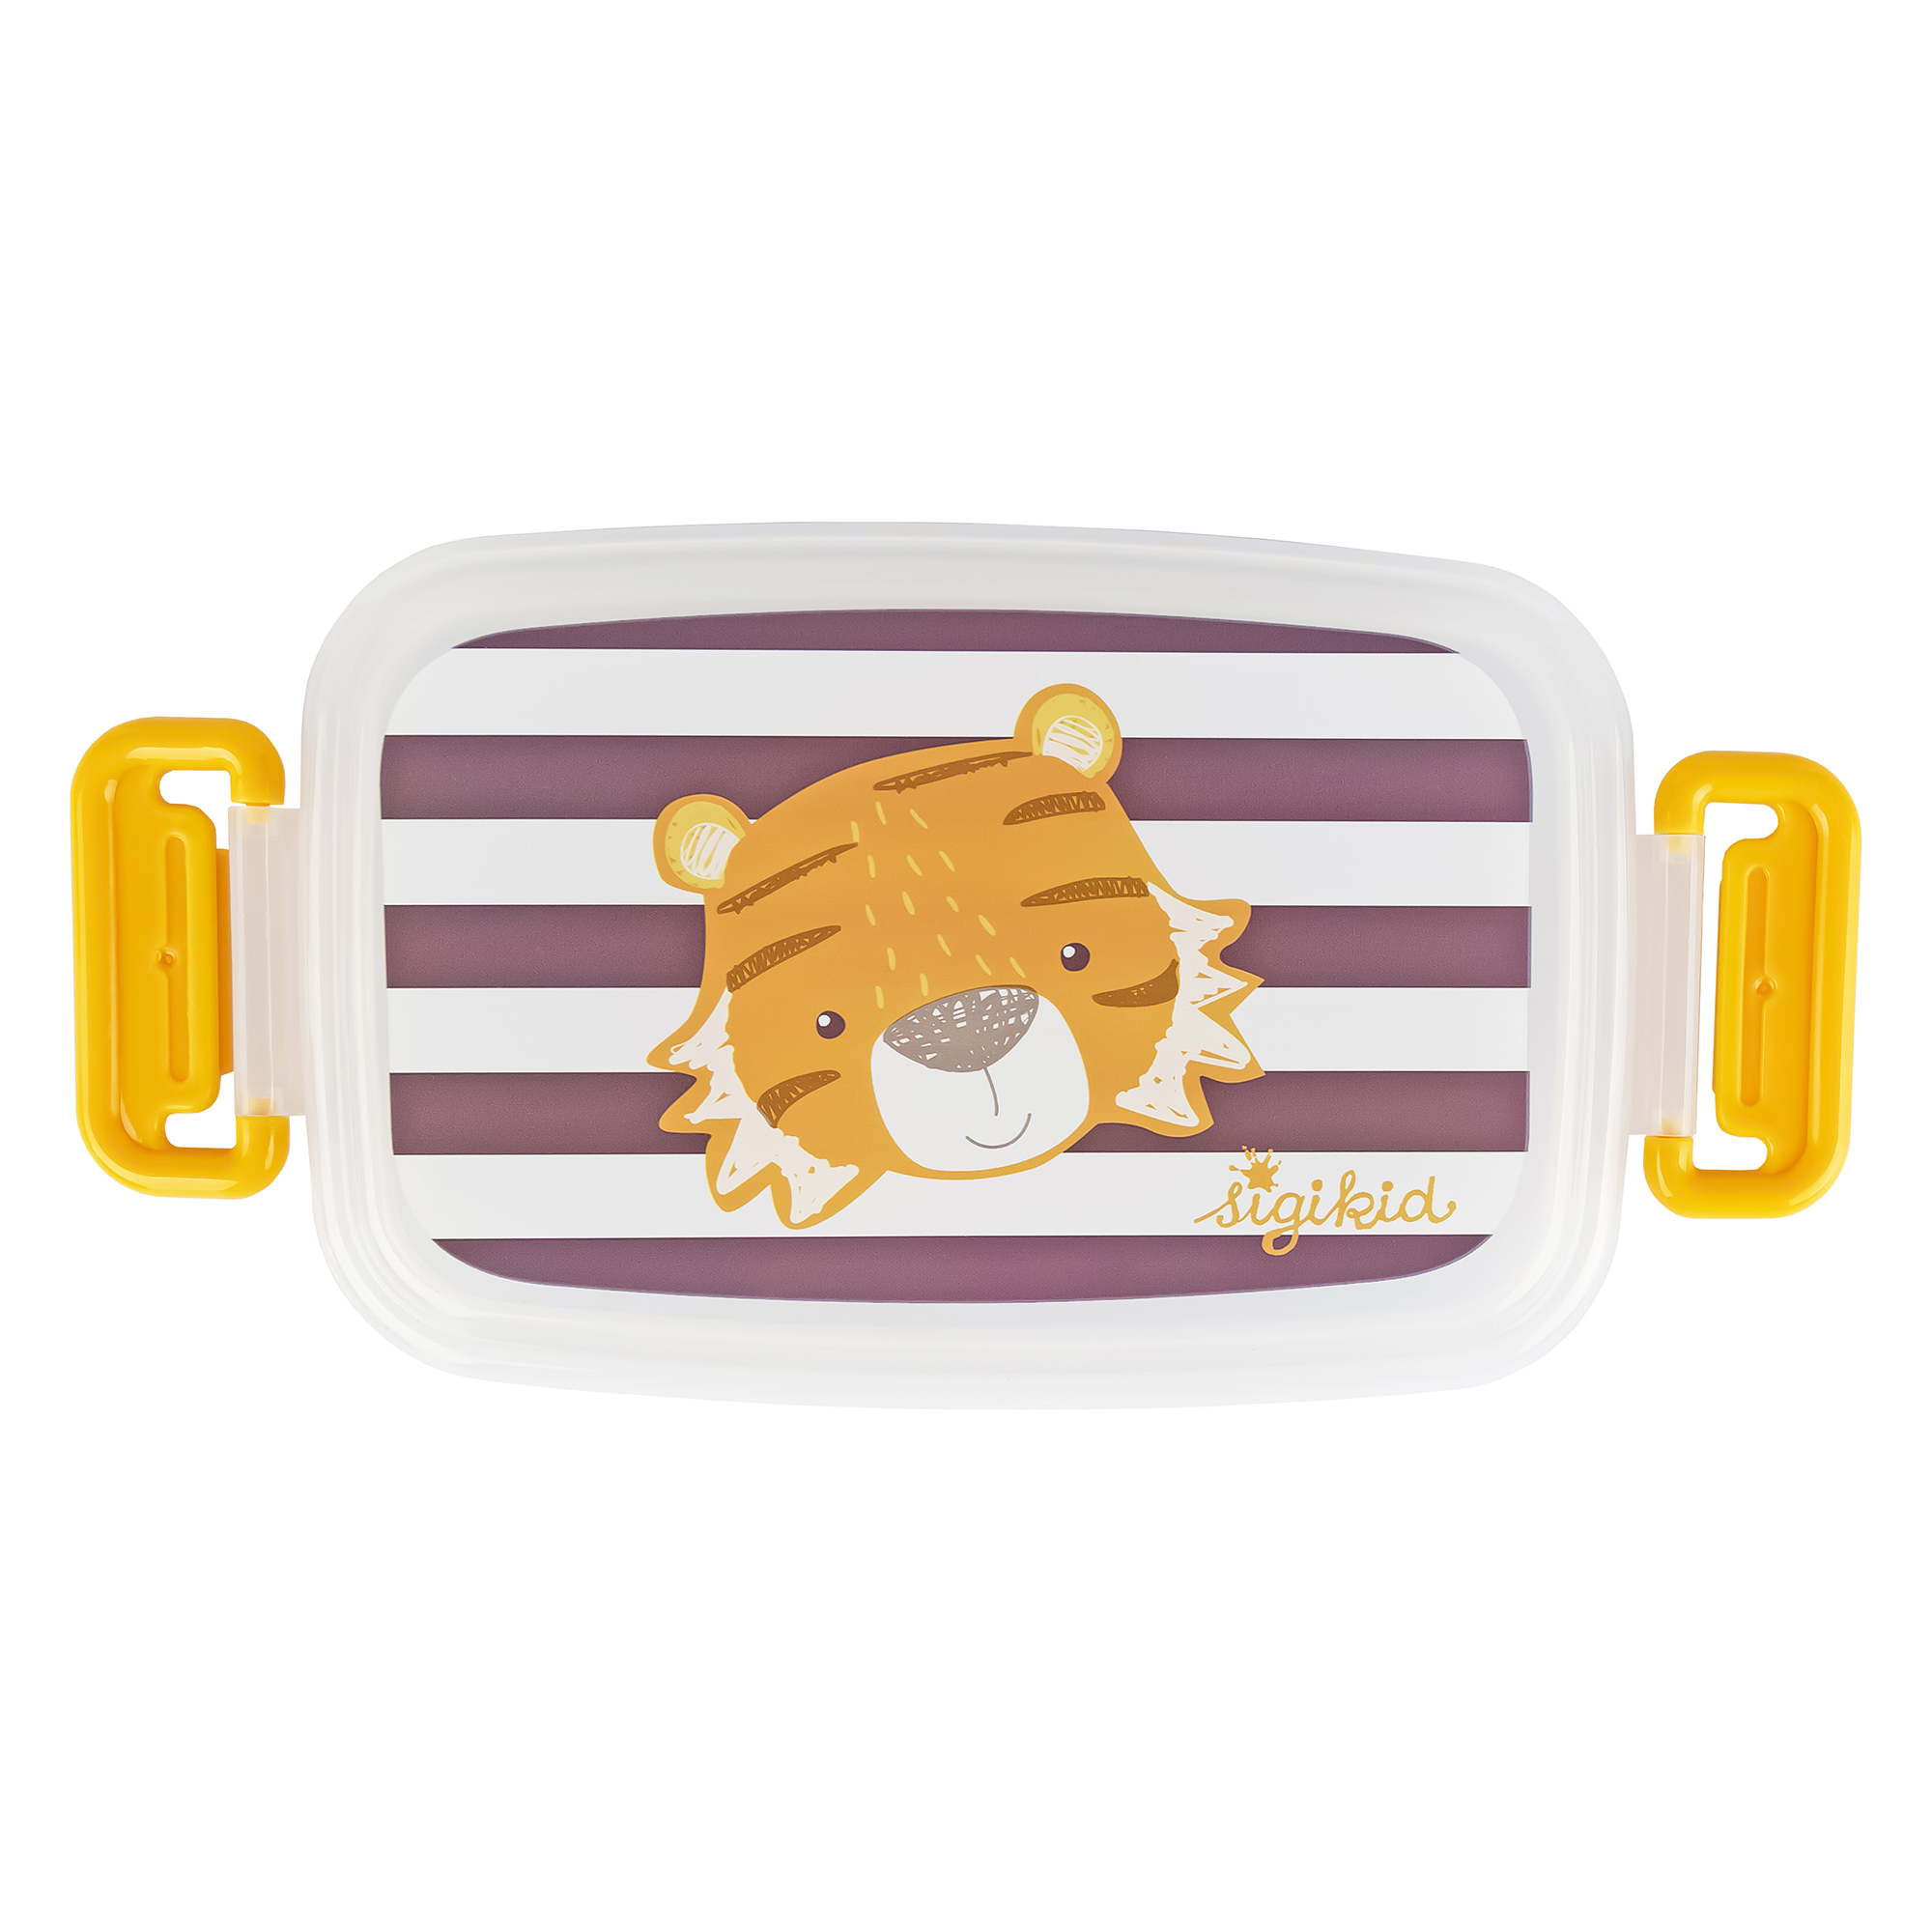 Brotbox-Deckel zu 25369 Tiger